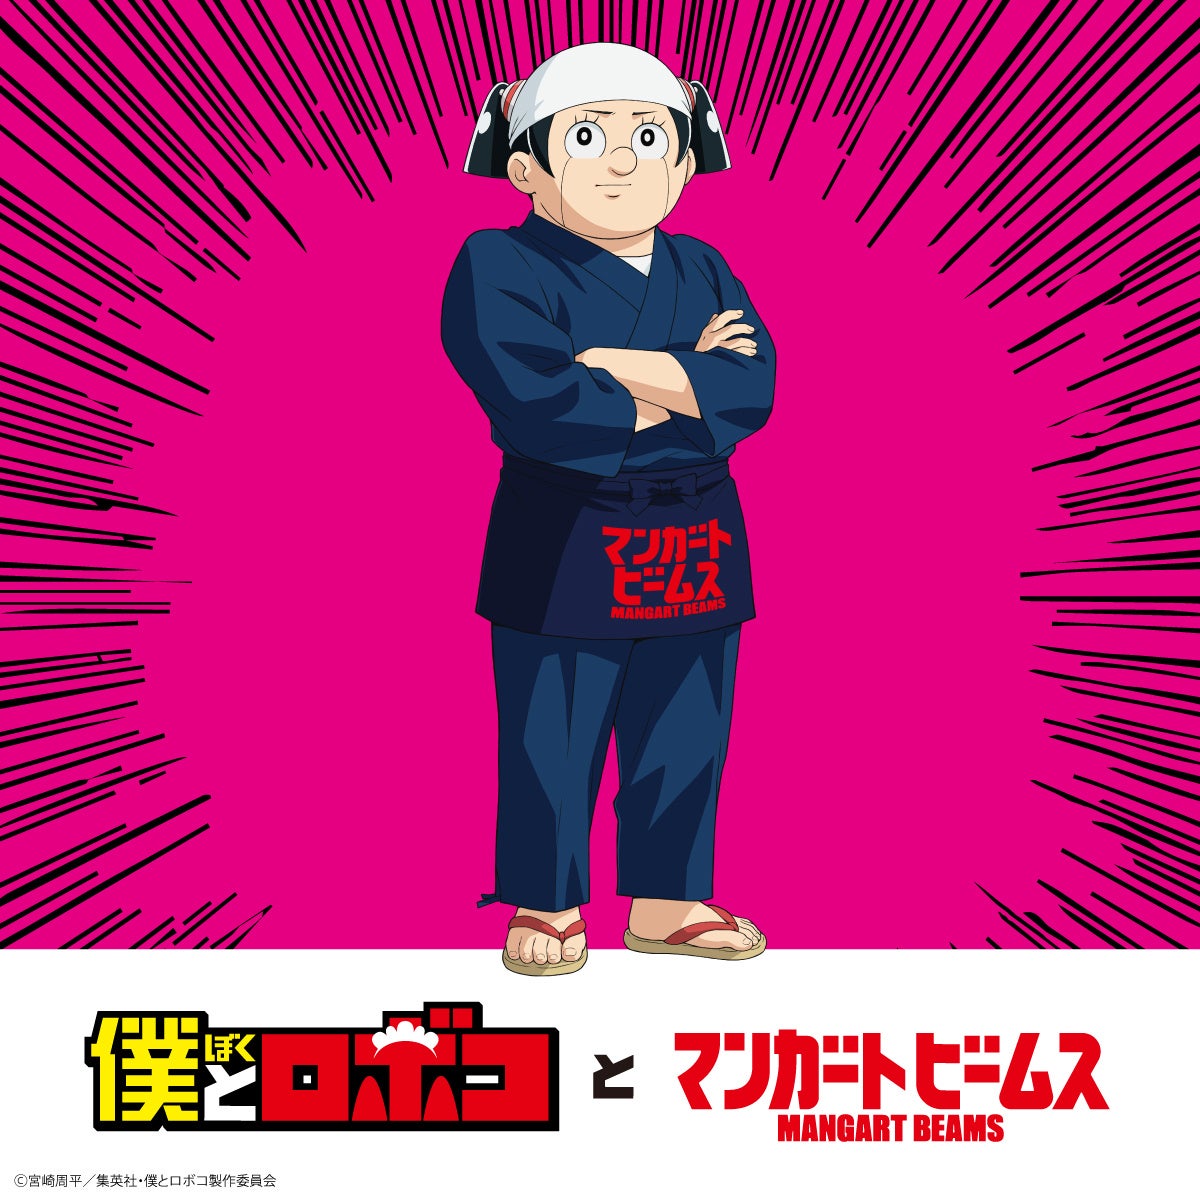 TVアニメ『僕とロボコ』と〈マンガート ビームス〉のコラボレーション企画「僕とロボコとマンガート ビームス」を発表